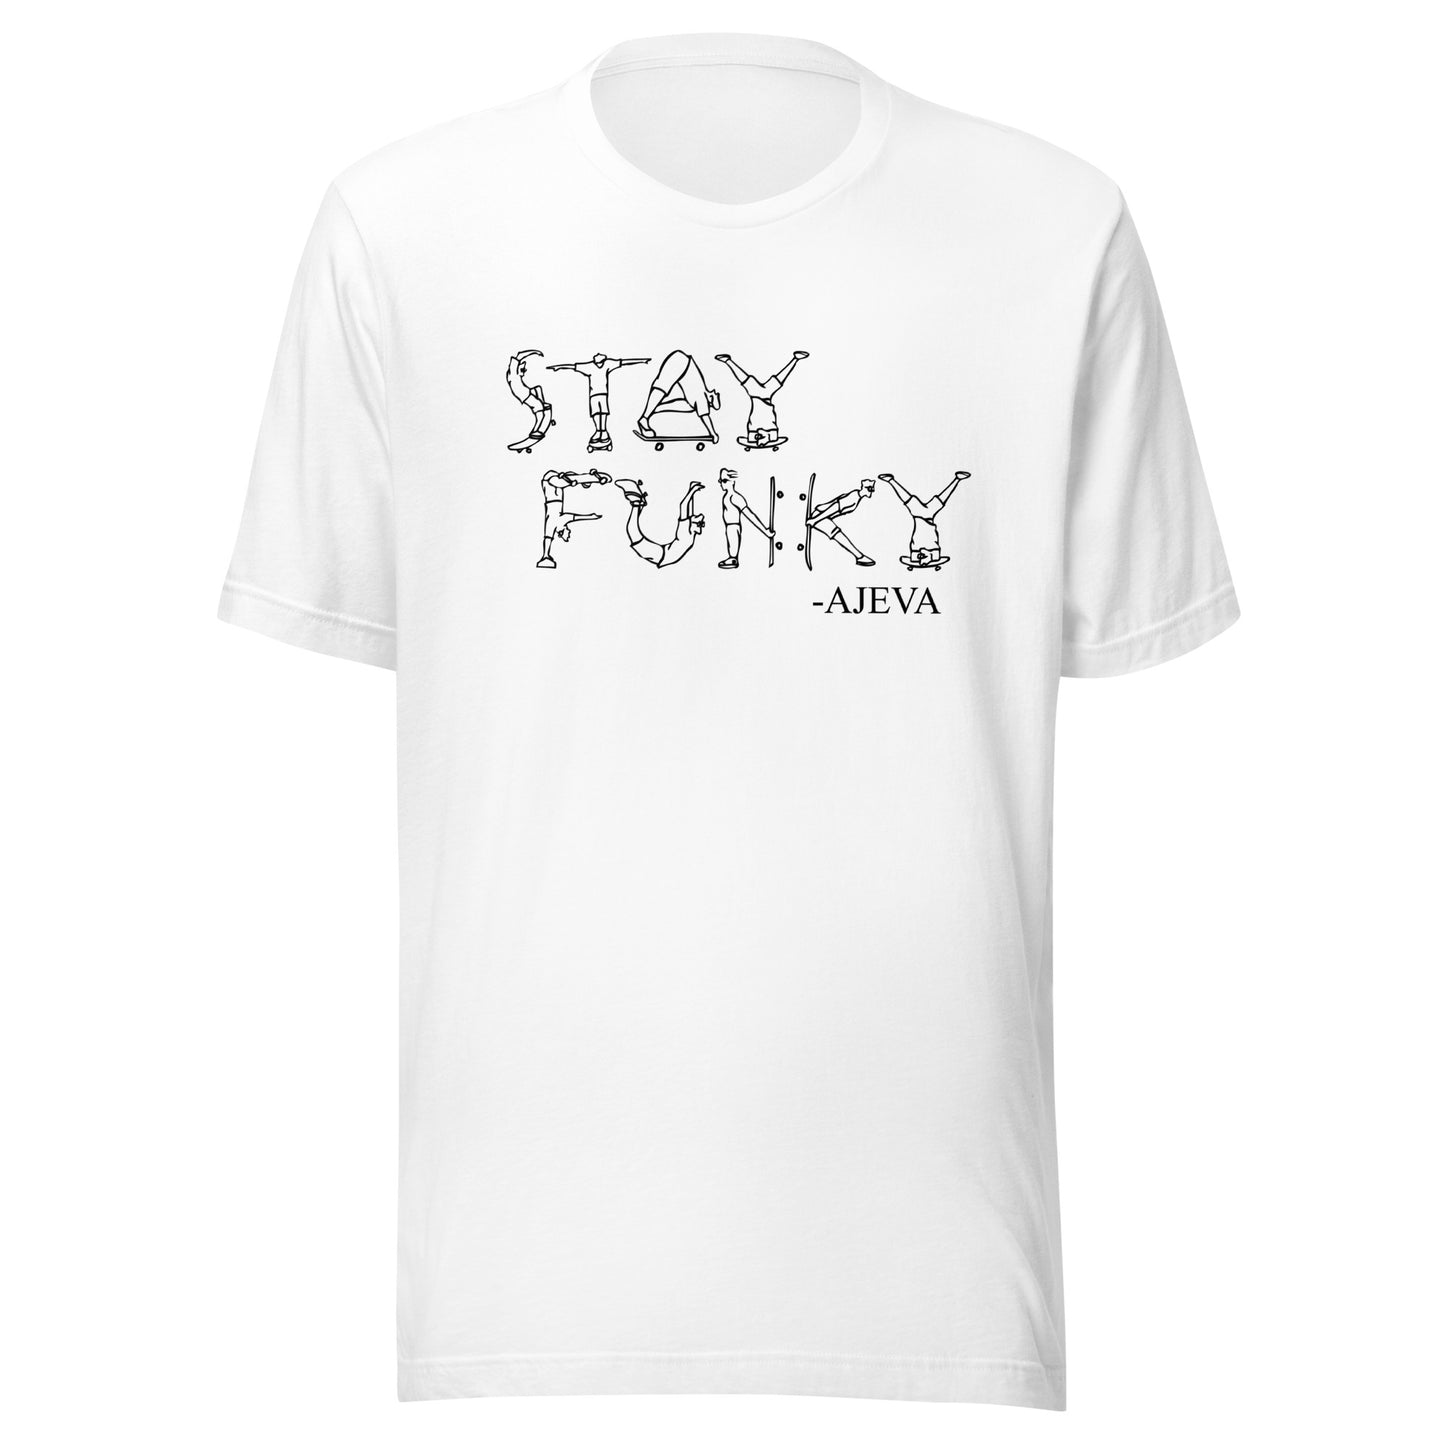 "Stay Funky"